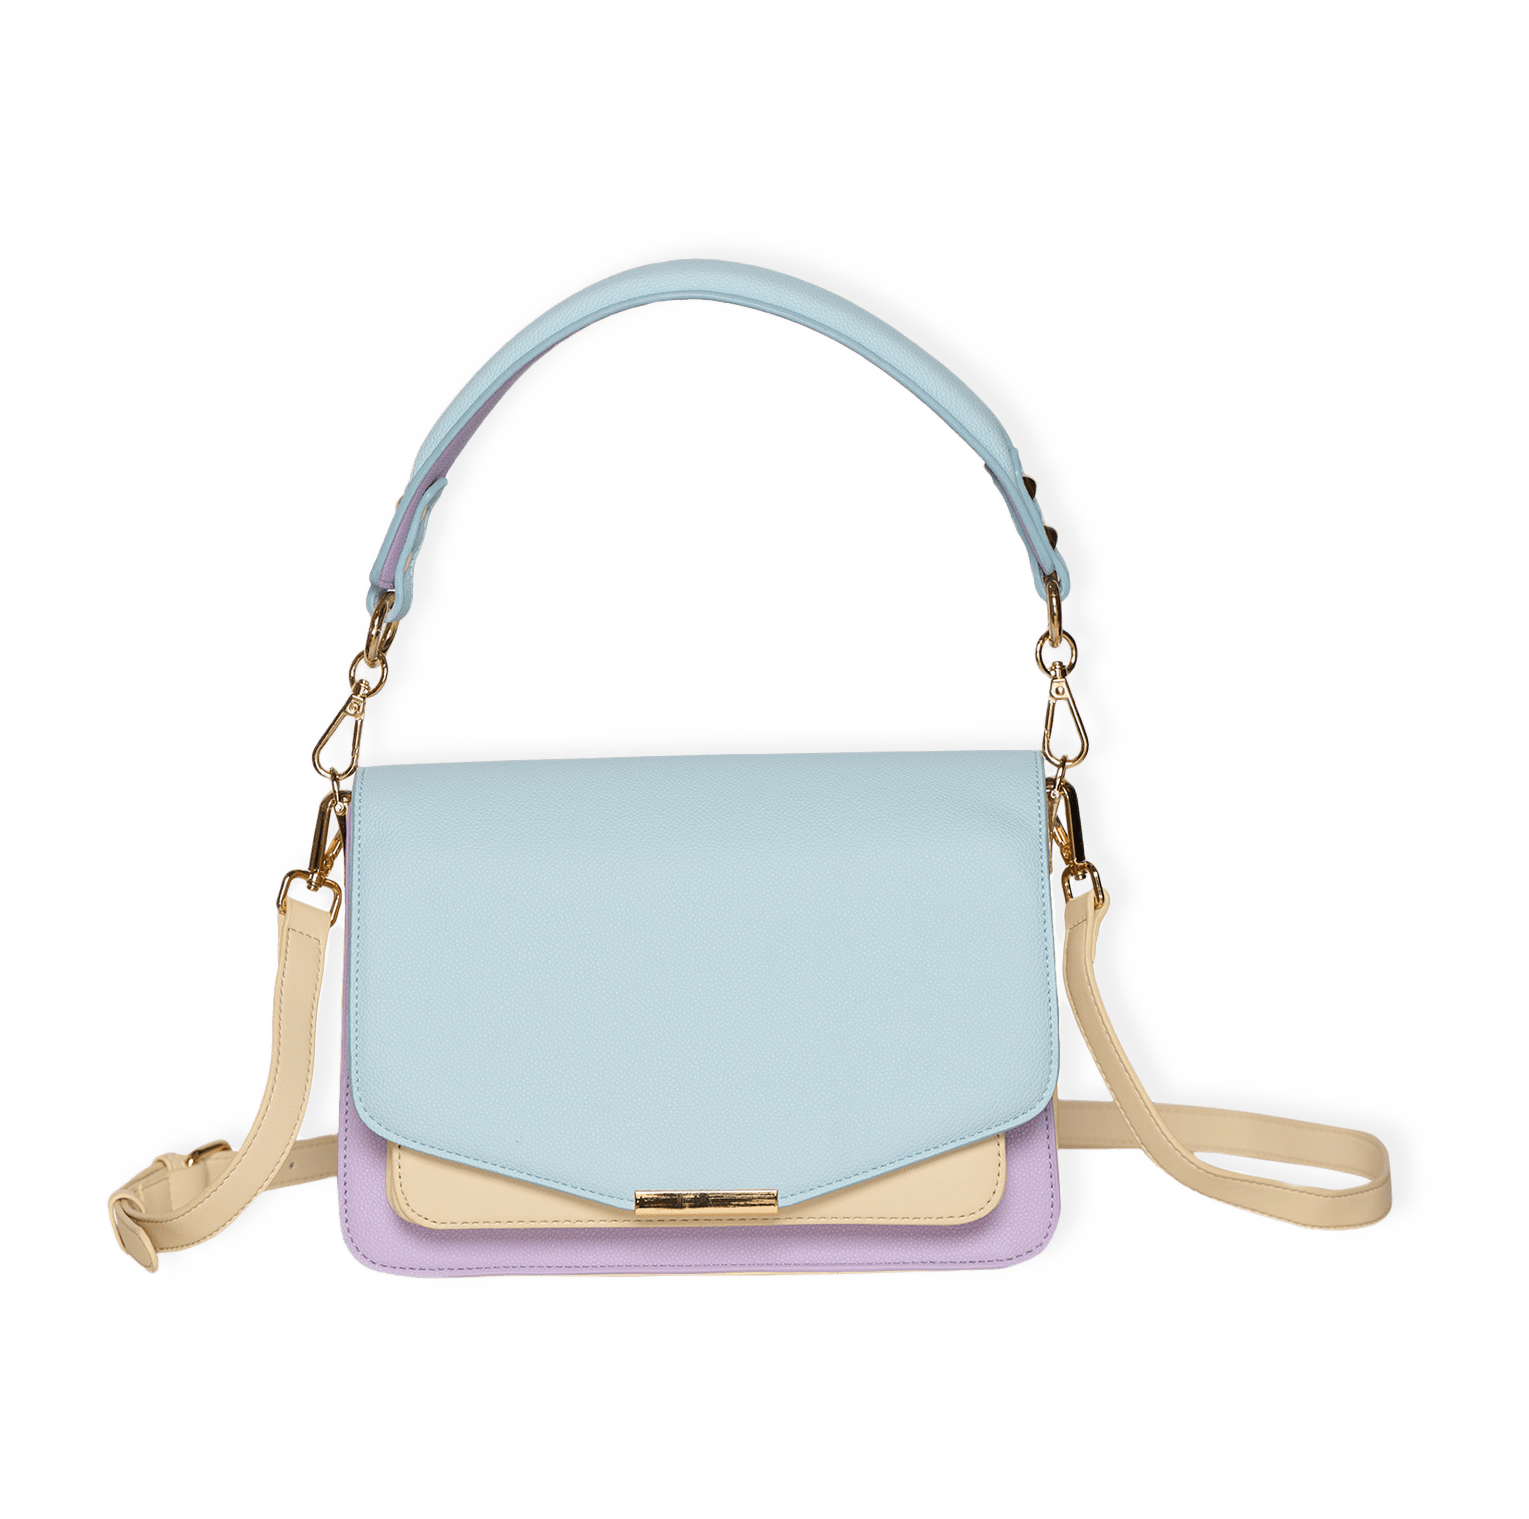 Blanca Multi Compartment Bag - Lightblue/lavender/offwhite från Noella